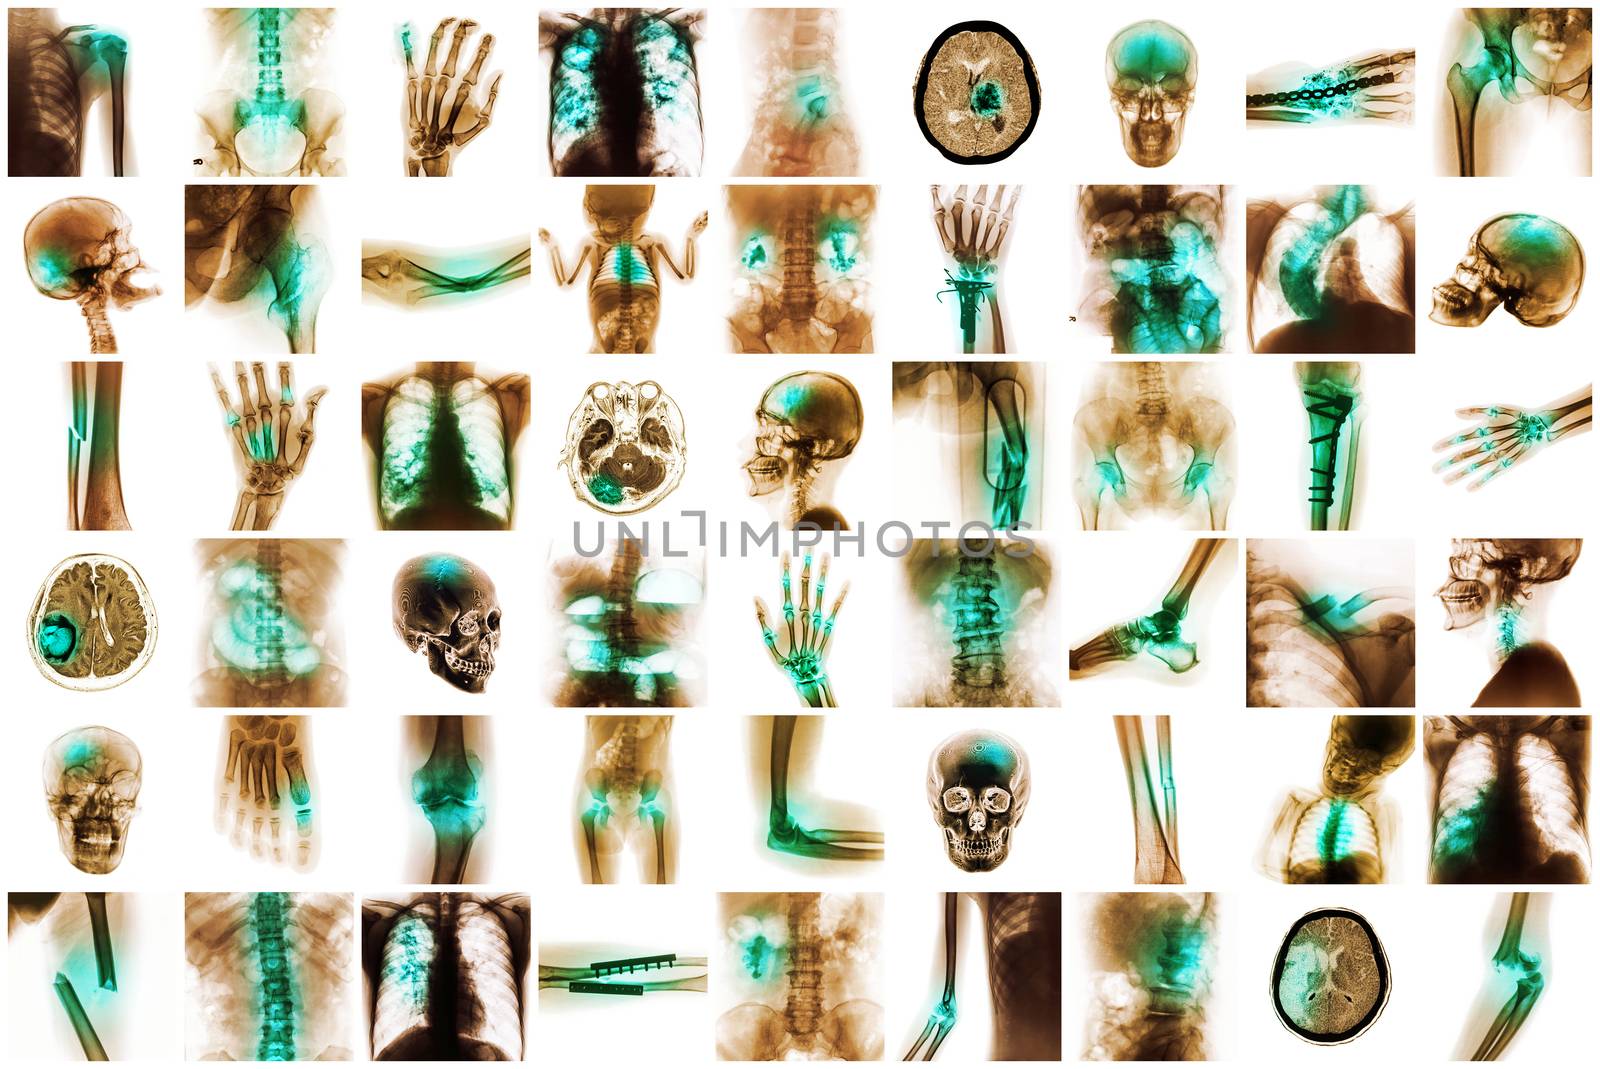 X-ray multiple disease of child and adult ( Stroke , Arthritis , Fracture , Tuberculosis , Brain tumor , Bowel obstruction , Kidney stone , Spondylosis , Spondylolisthesis , Osteoarthritis knee ,etc)